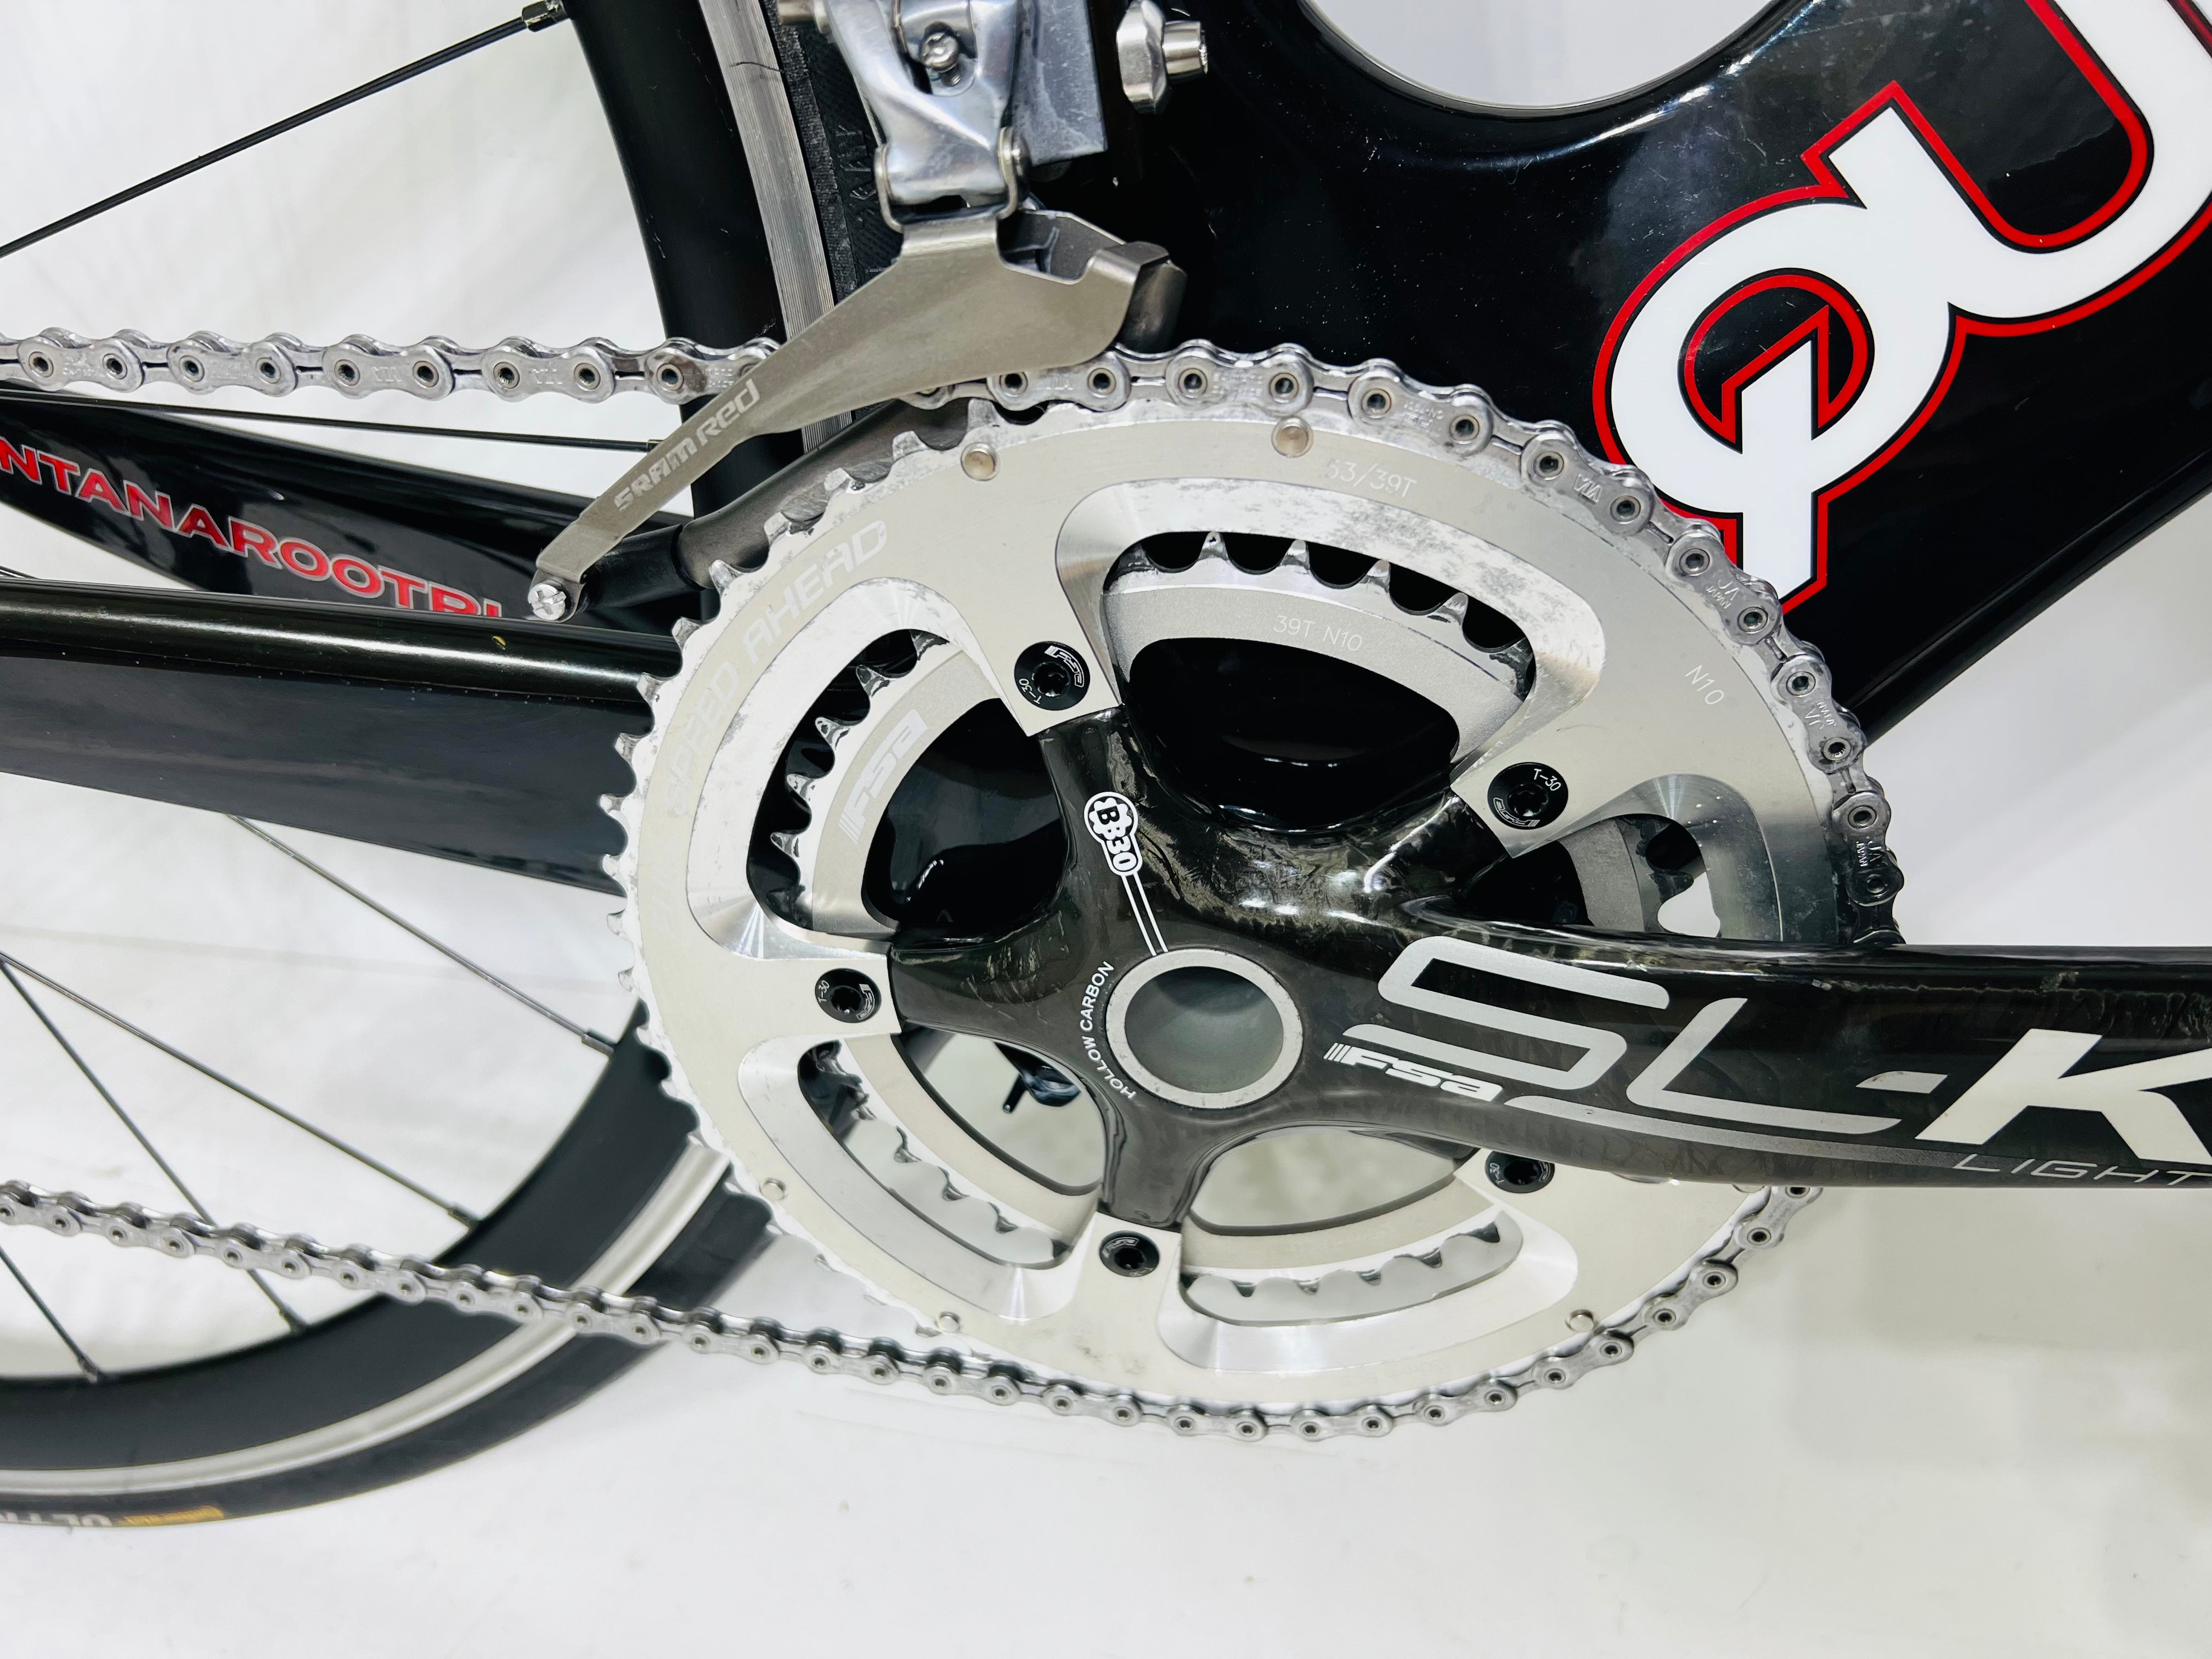 Quintana Roo CD 0.1 Carbon Fiber Triathlon Bike- 55cm (ML)